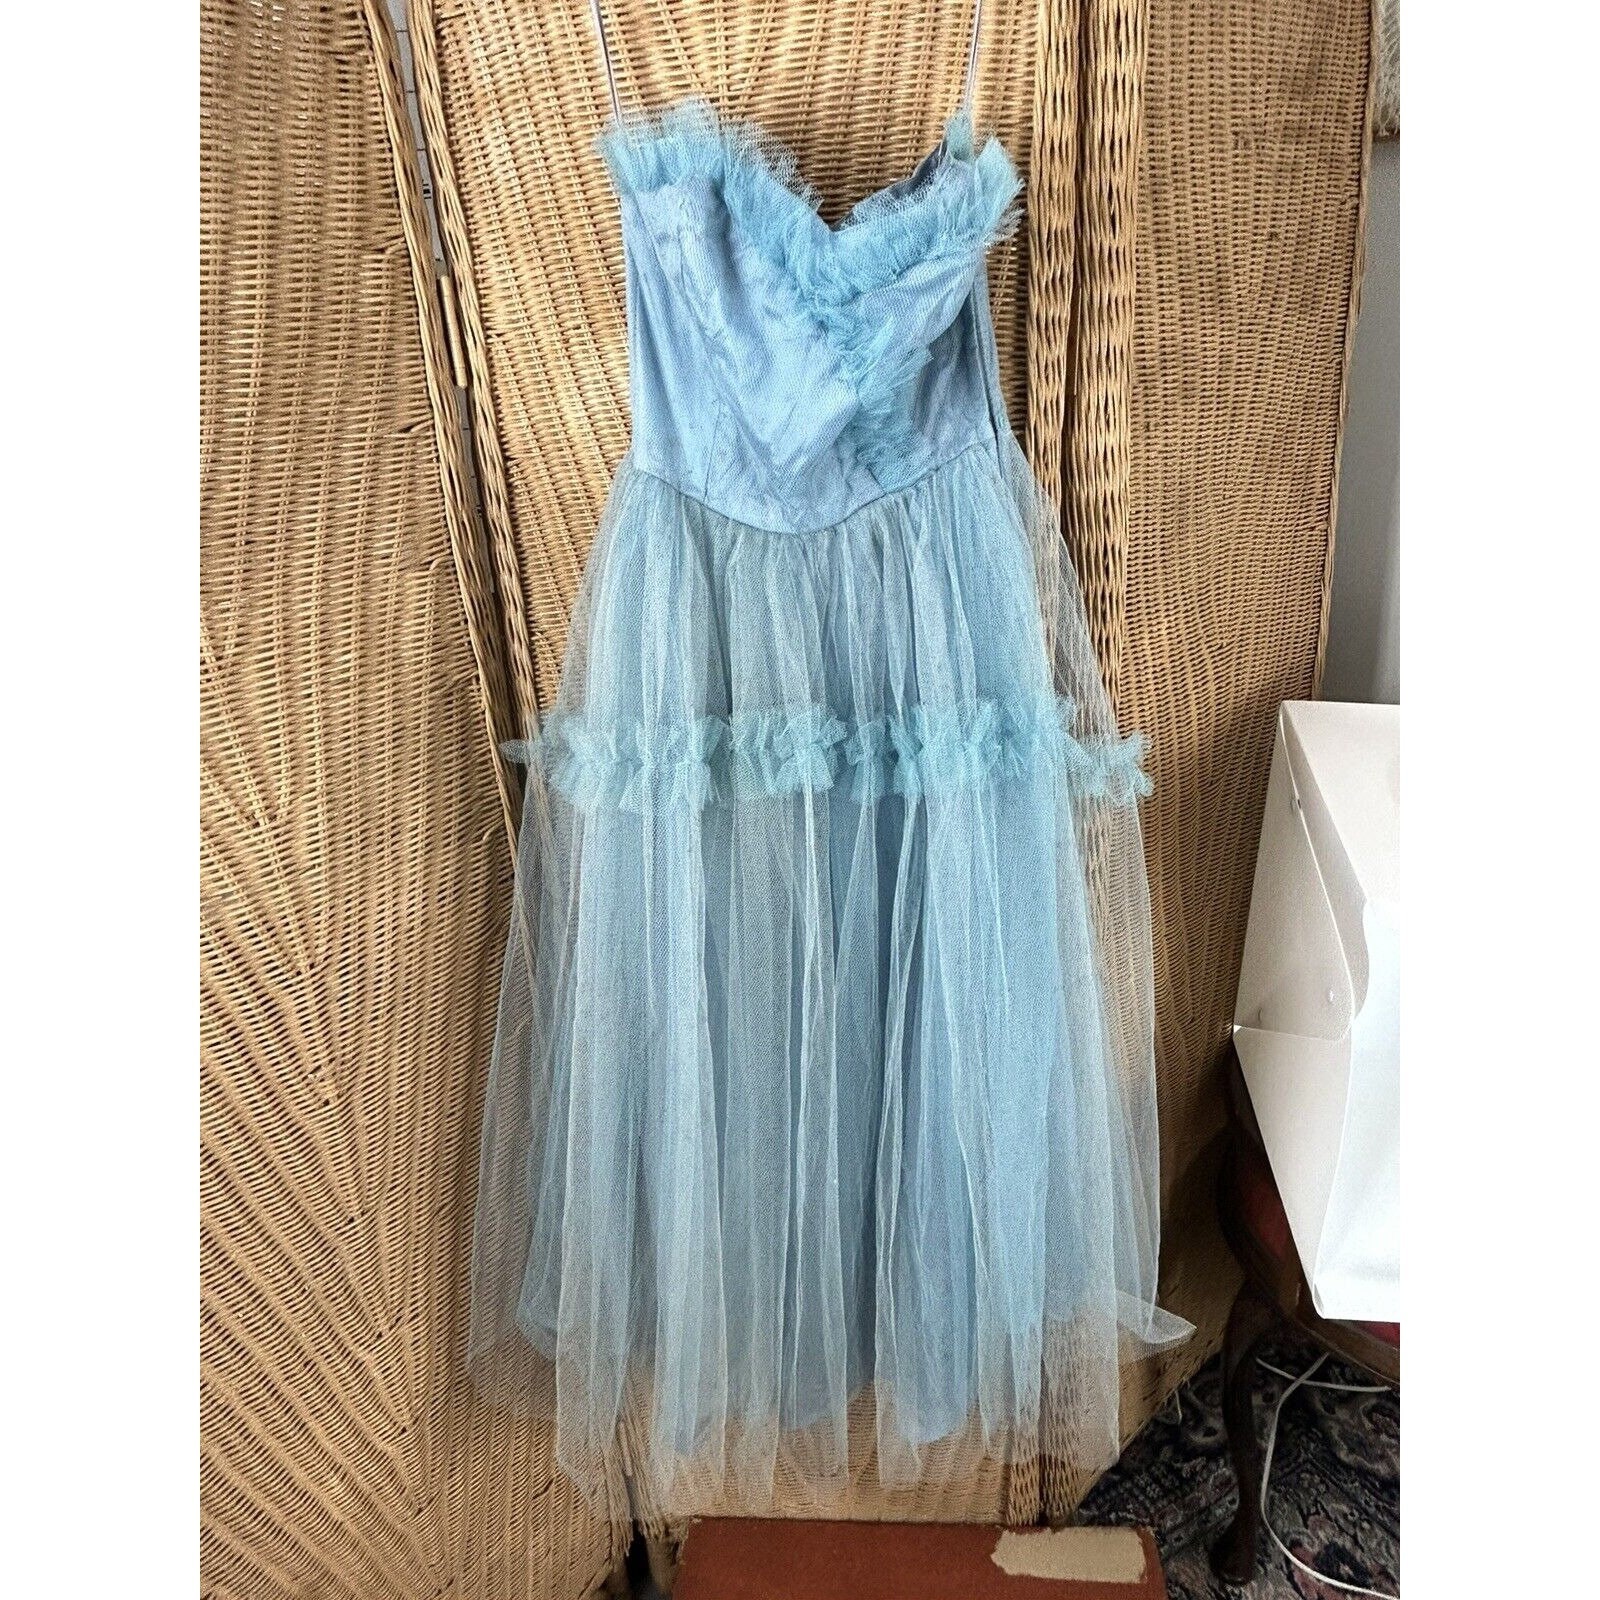 Milla Blue One-Shoulder Cocktail Tulle Dress XXL / Blue